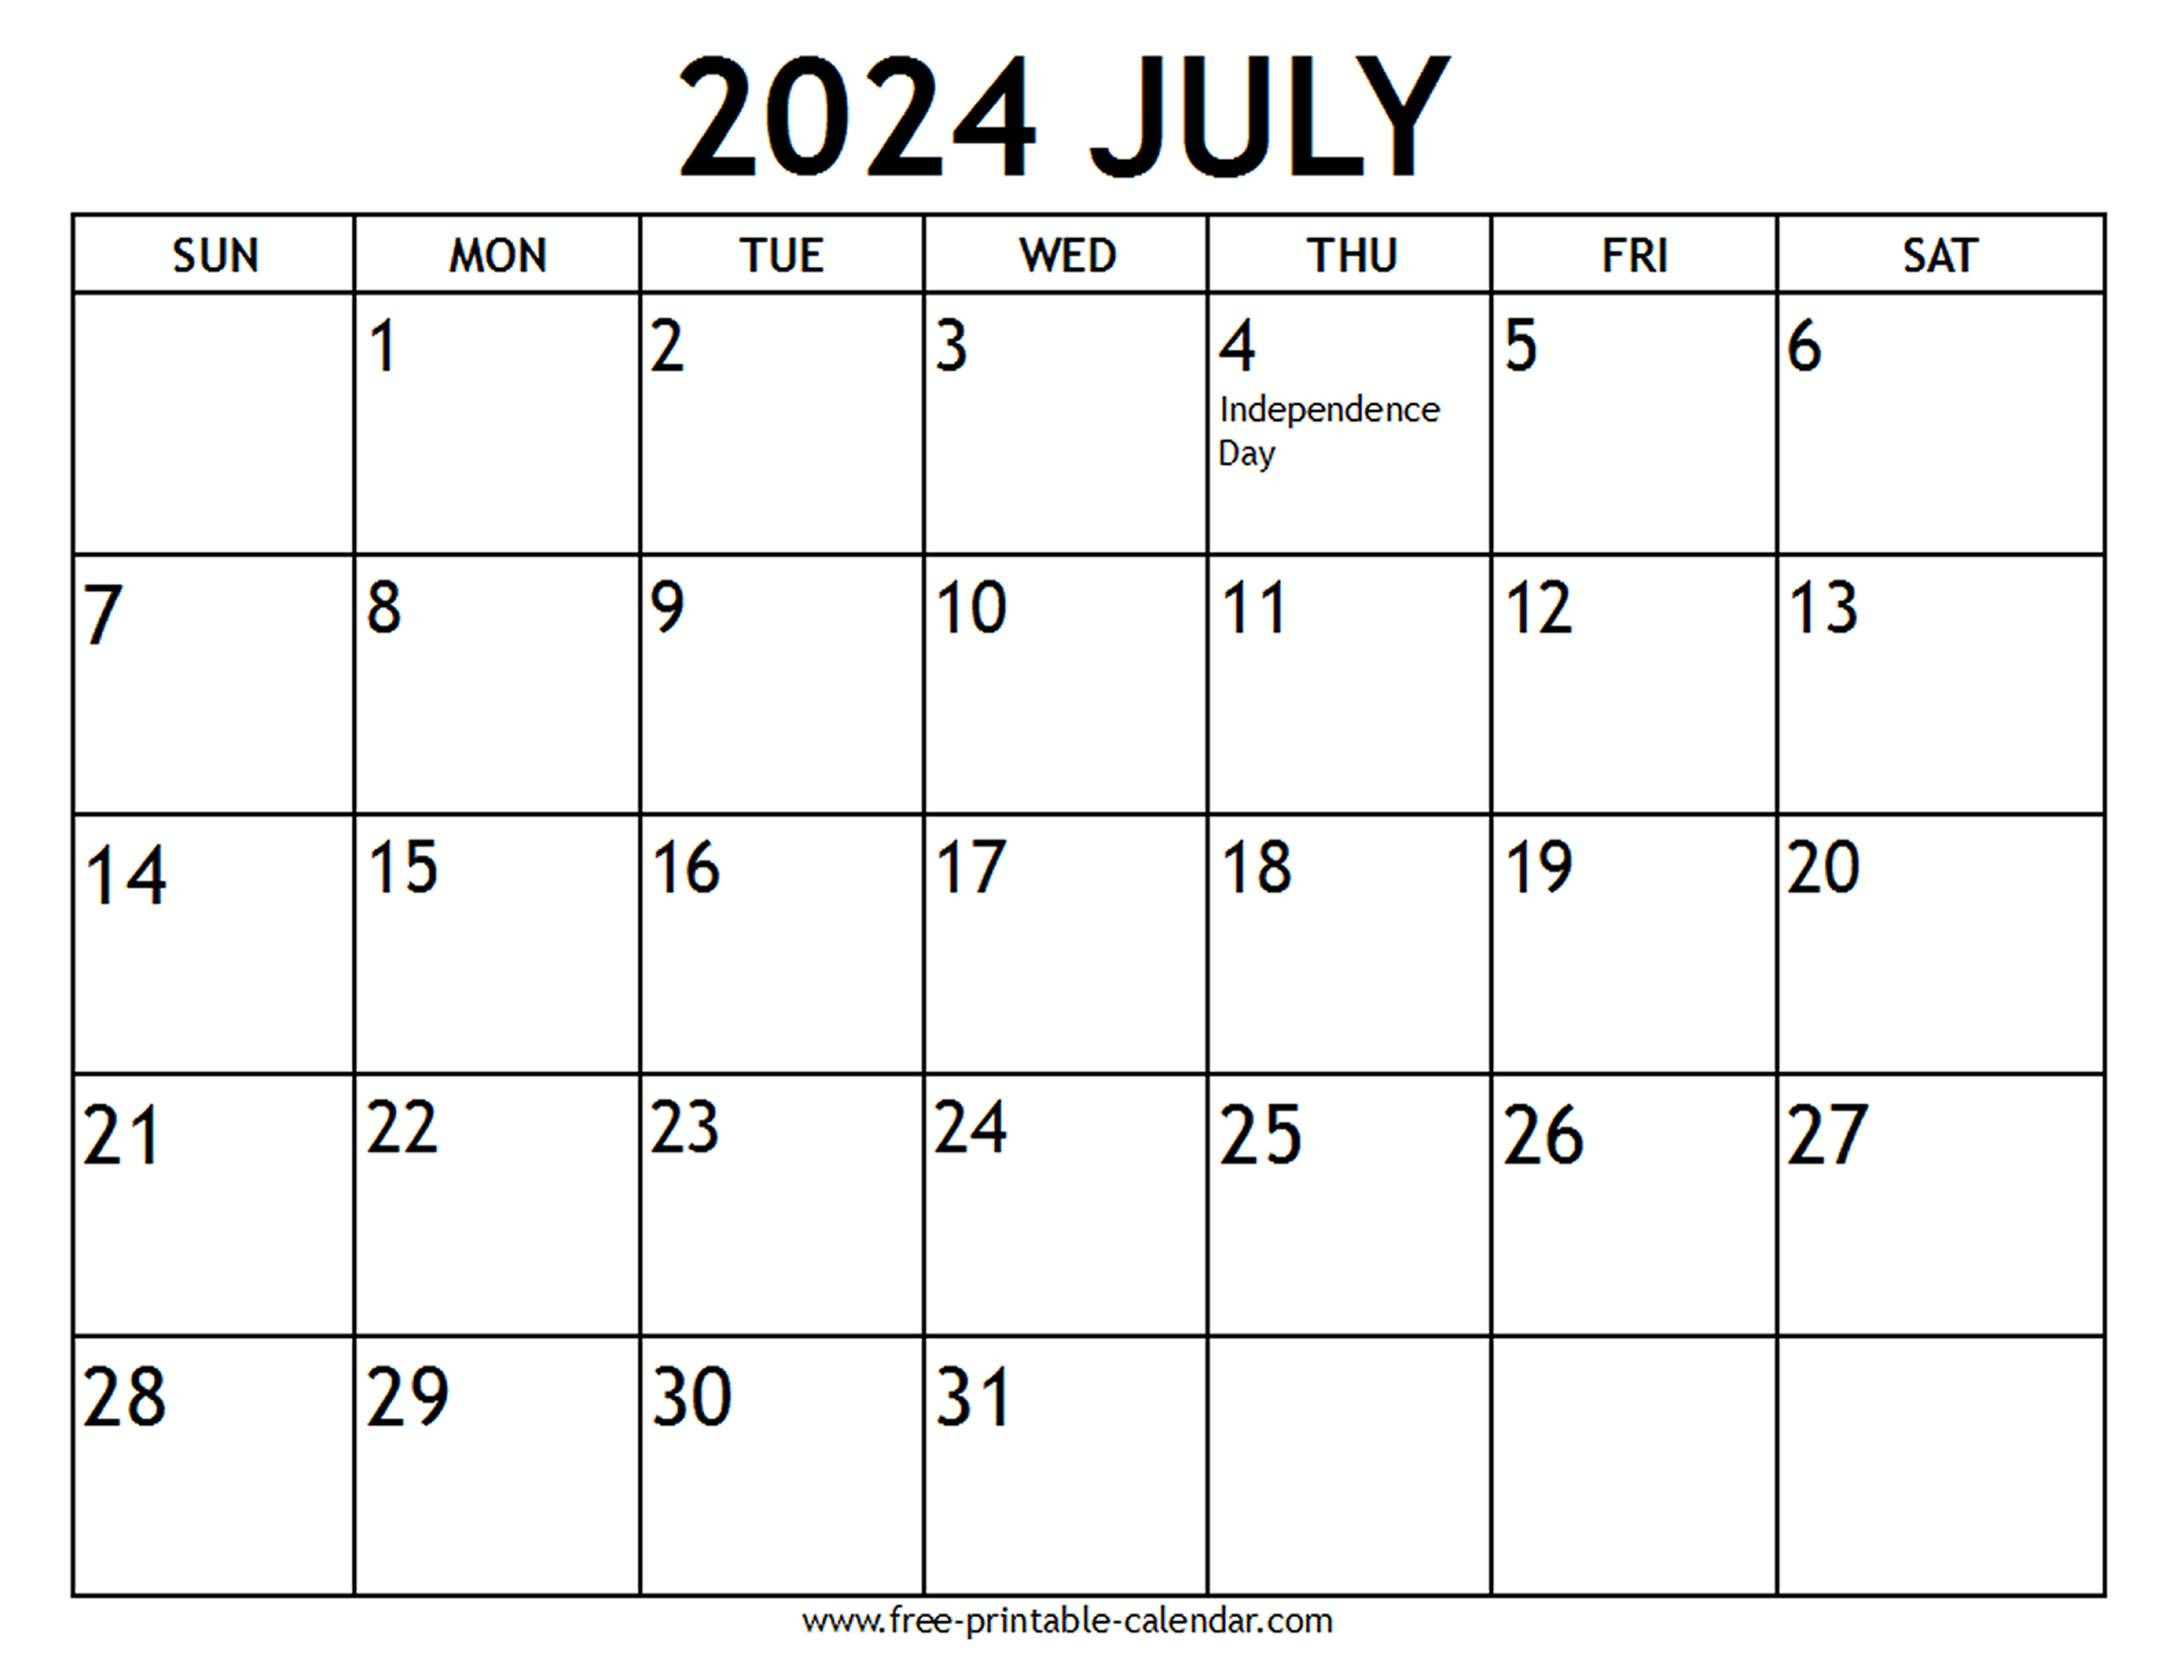 July 2024 Calendar Us Holidays - Free-Printable-Calendar | Us Calendar July 2024